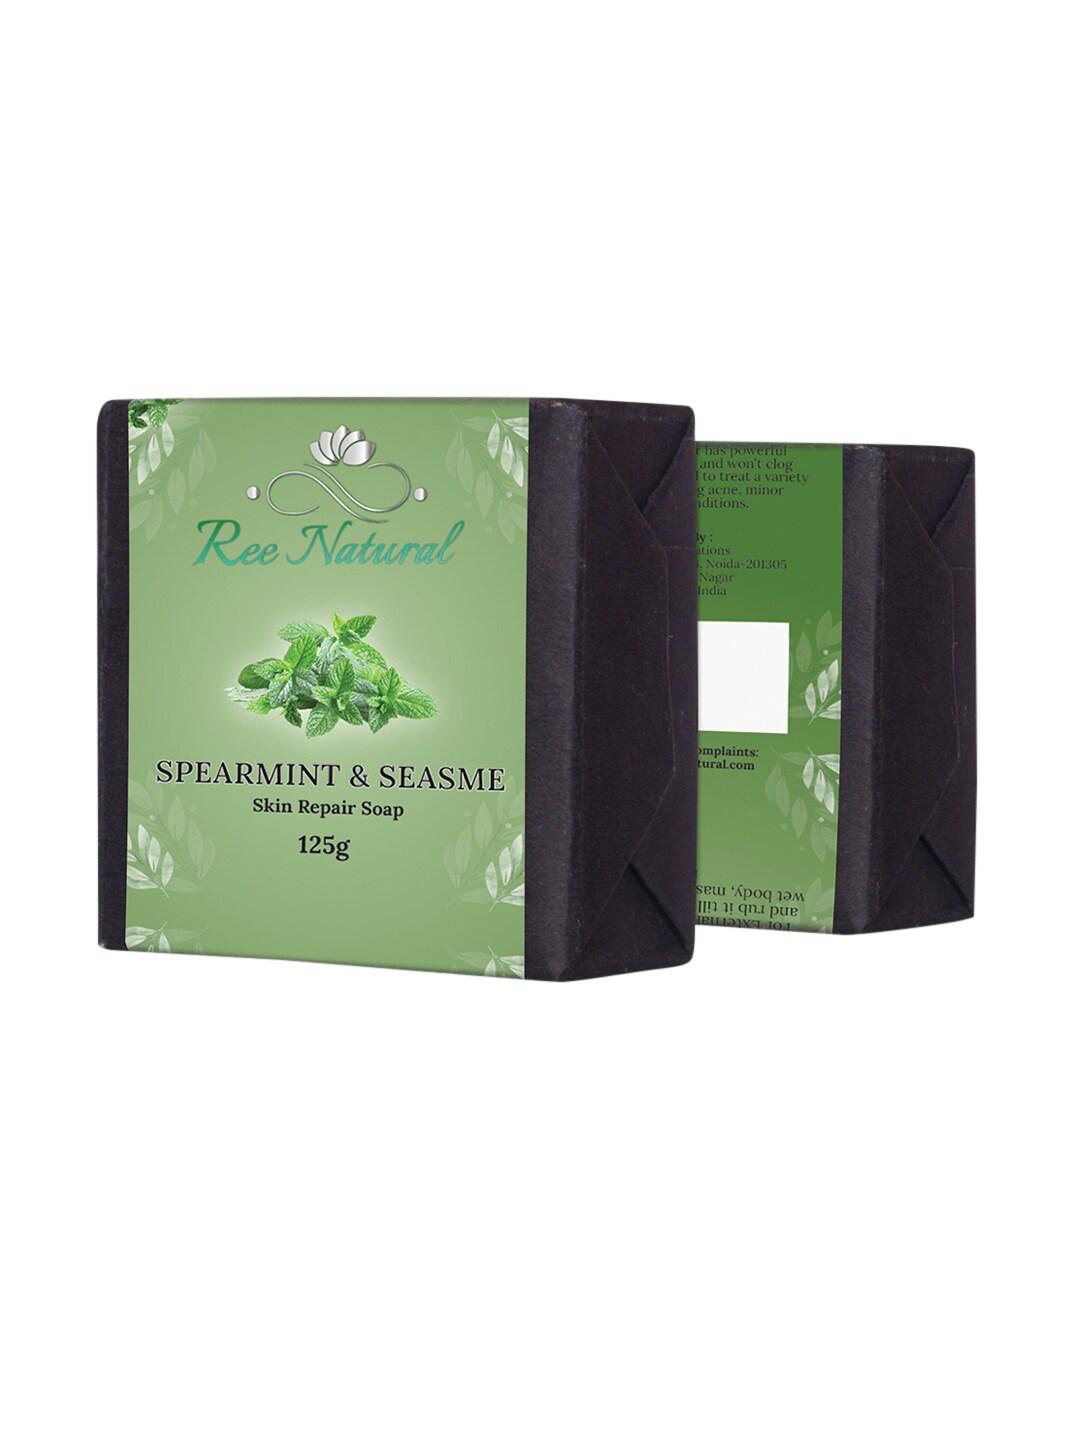 Ree Natural Cold Processed Spearmint & Sesame Skin Repair Soap - 125g